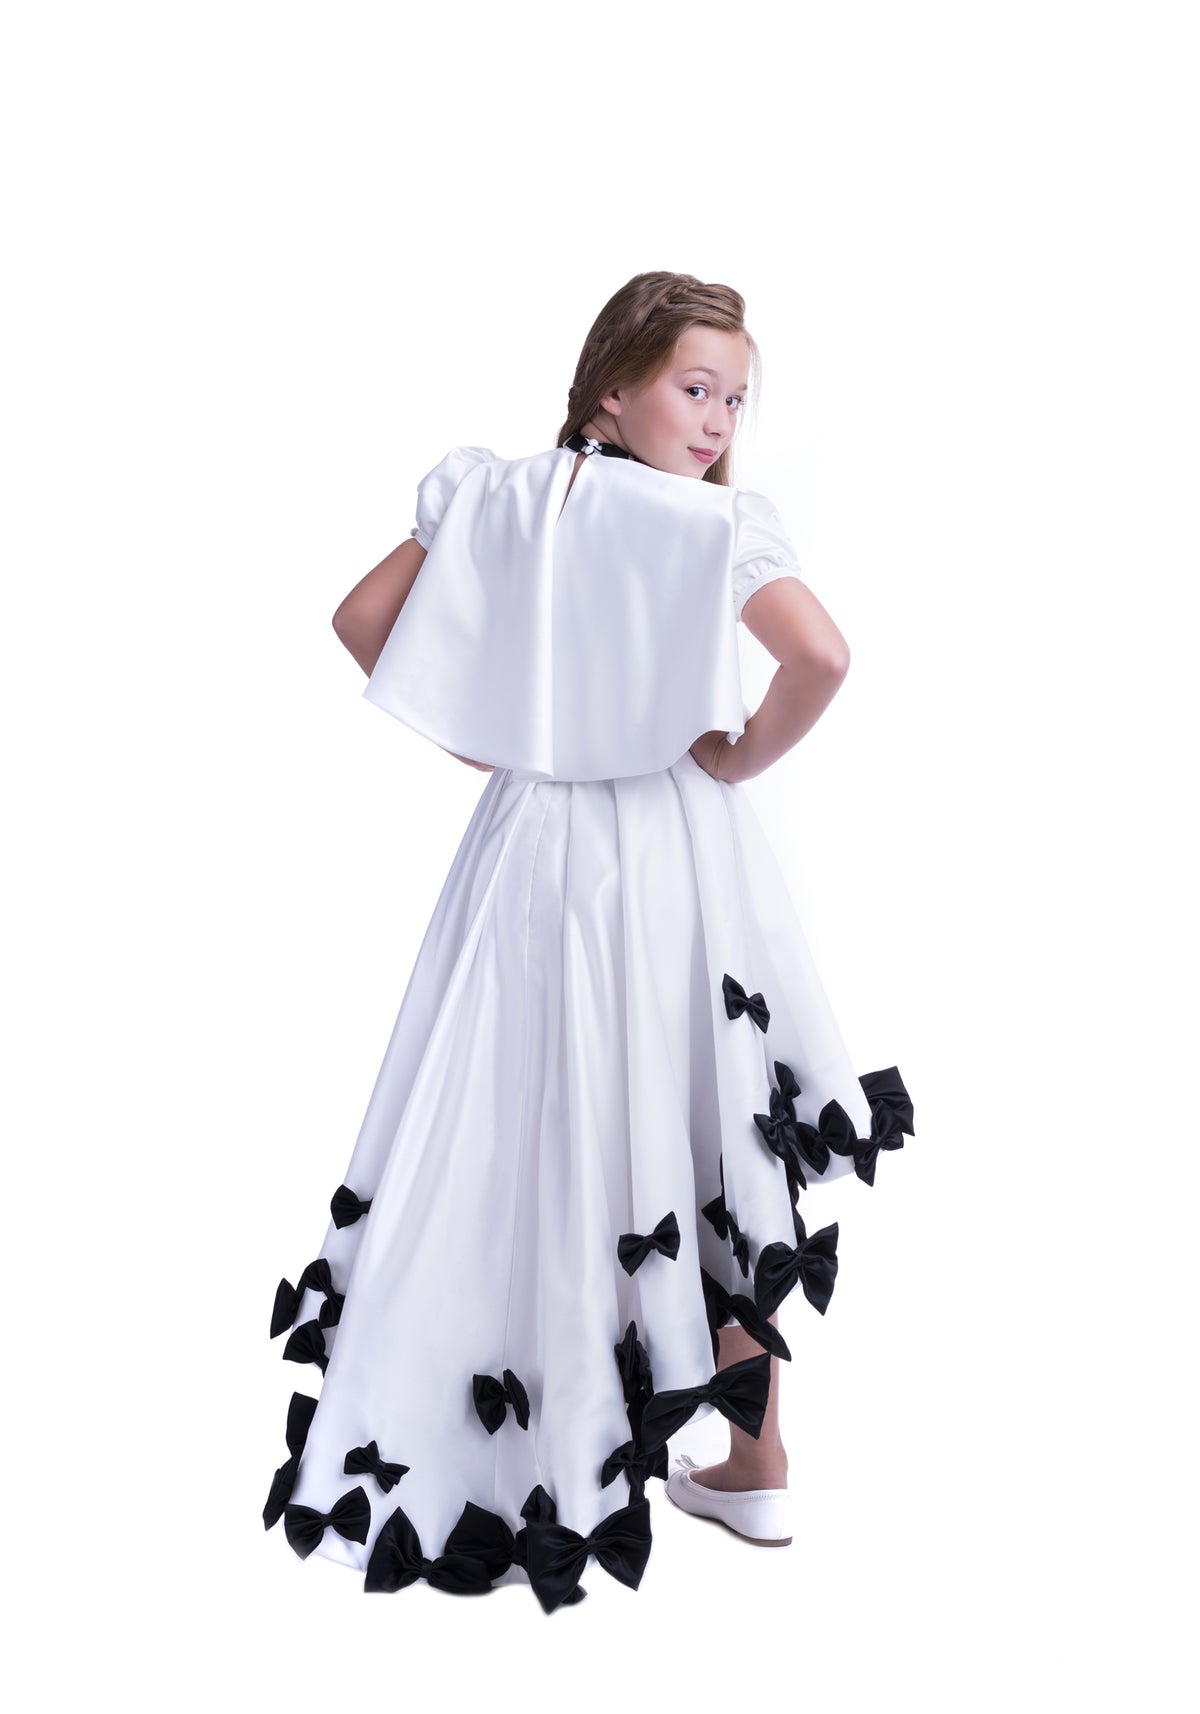 Elegant white dress with black bows